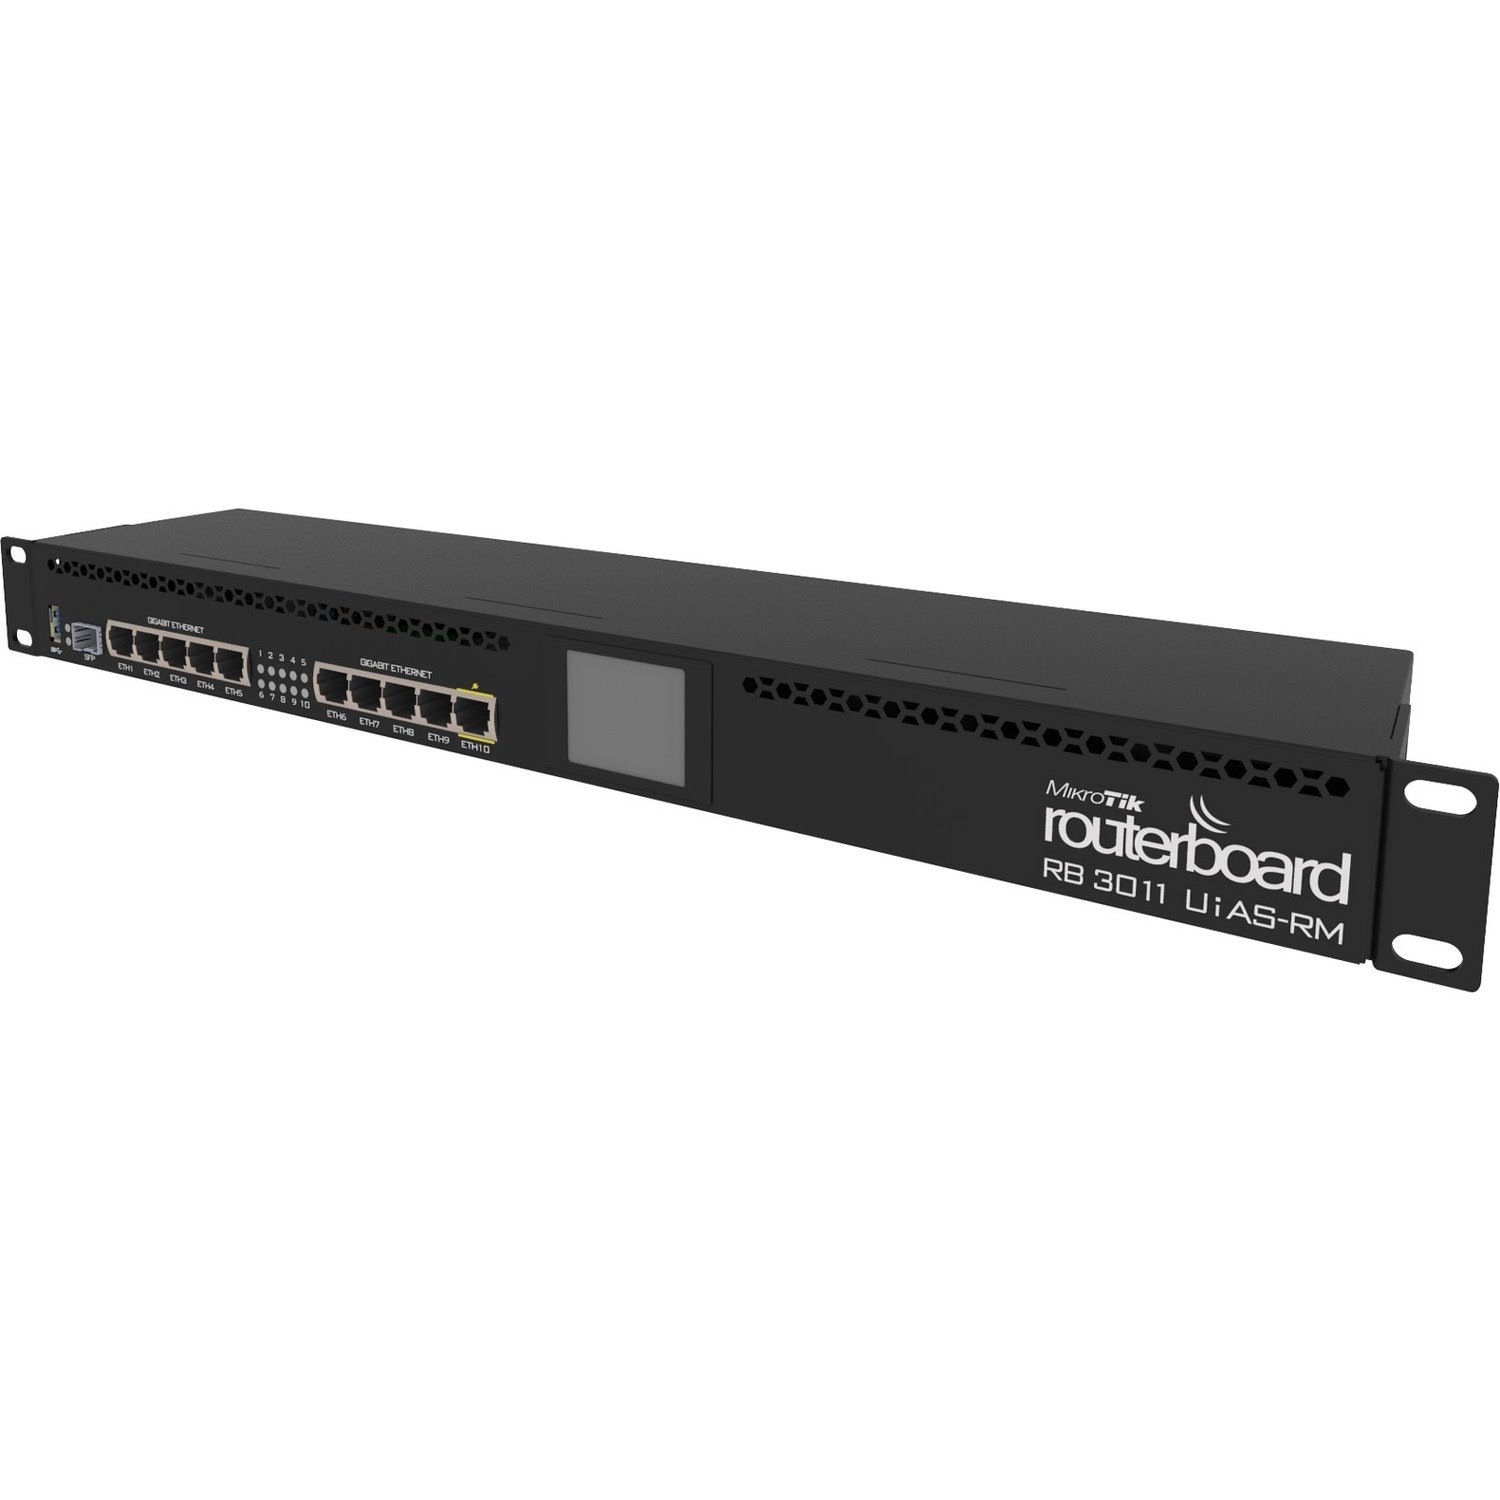 MikroTik (RB3011UiAS-RM) 1U rackmount; 10xGigabit Ethernet, SFP, USB 3.0, LCD, PoE out on port 10, 2x1.4GHz CPU, 1GB RAM, RouterOS L5